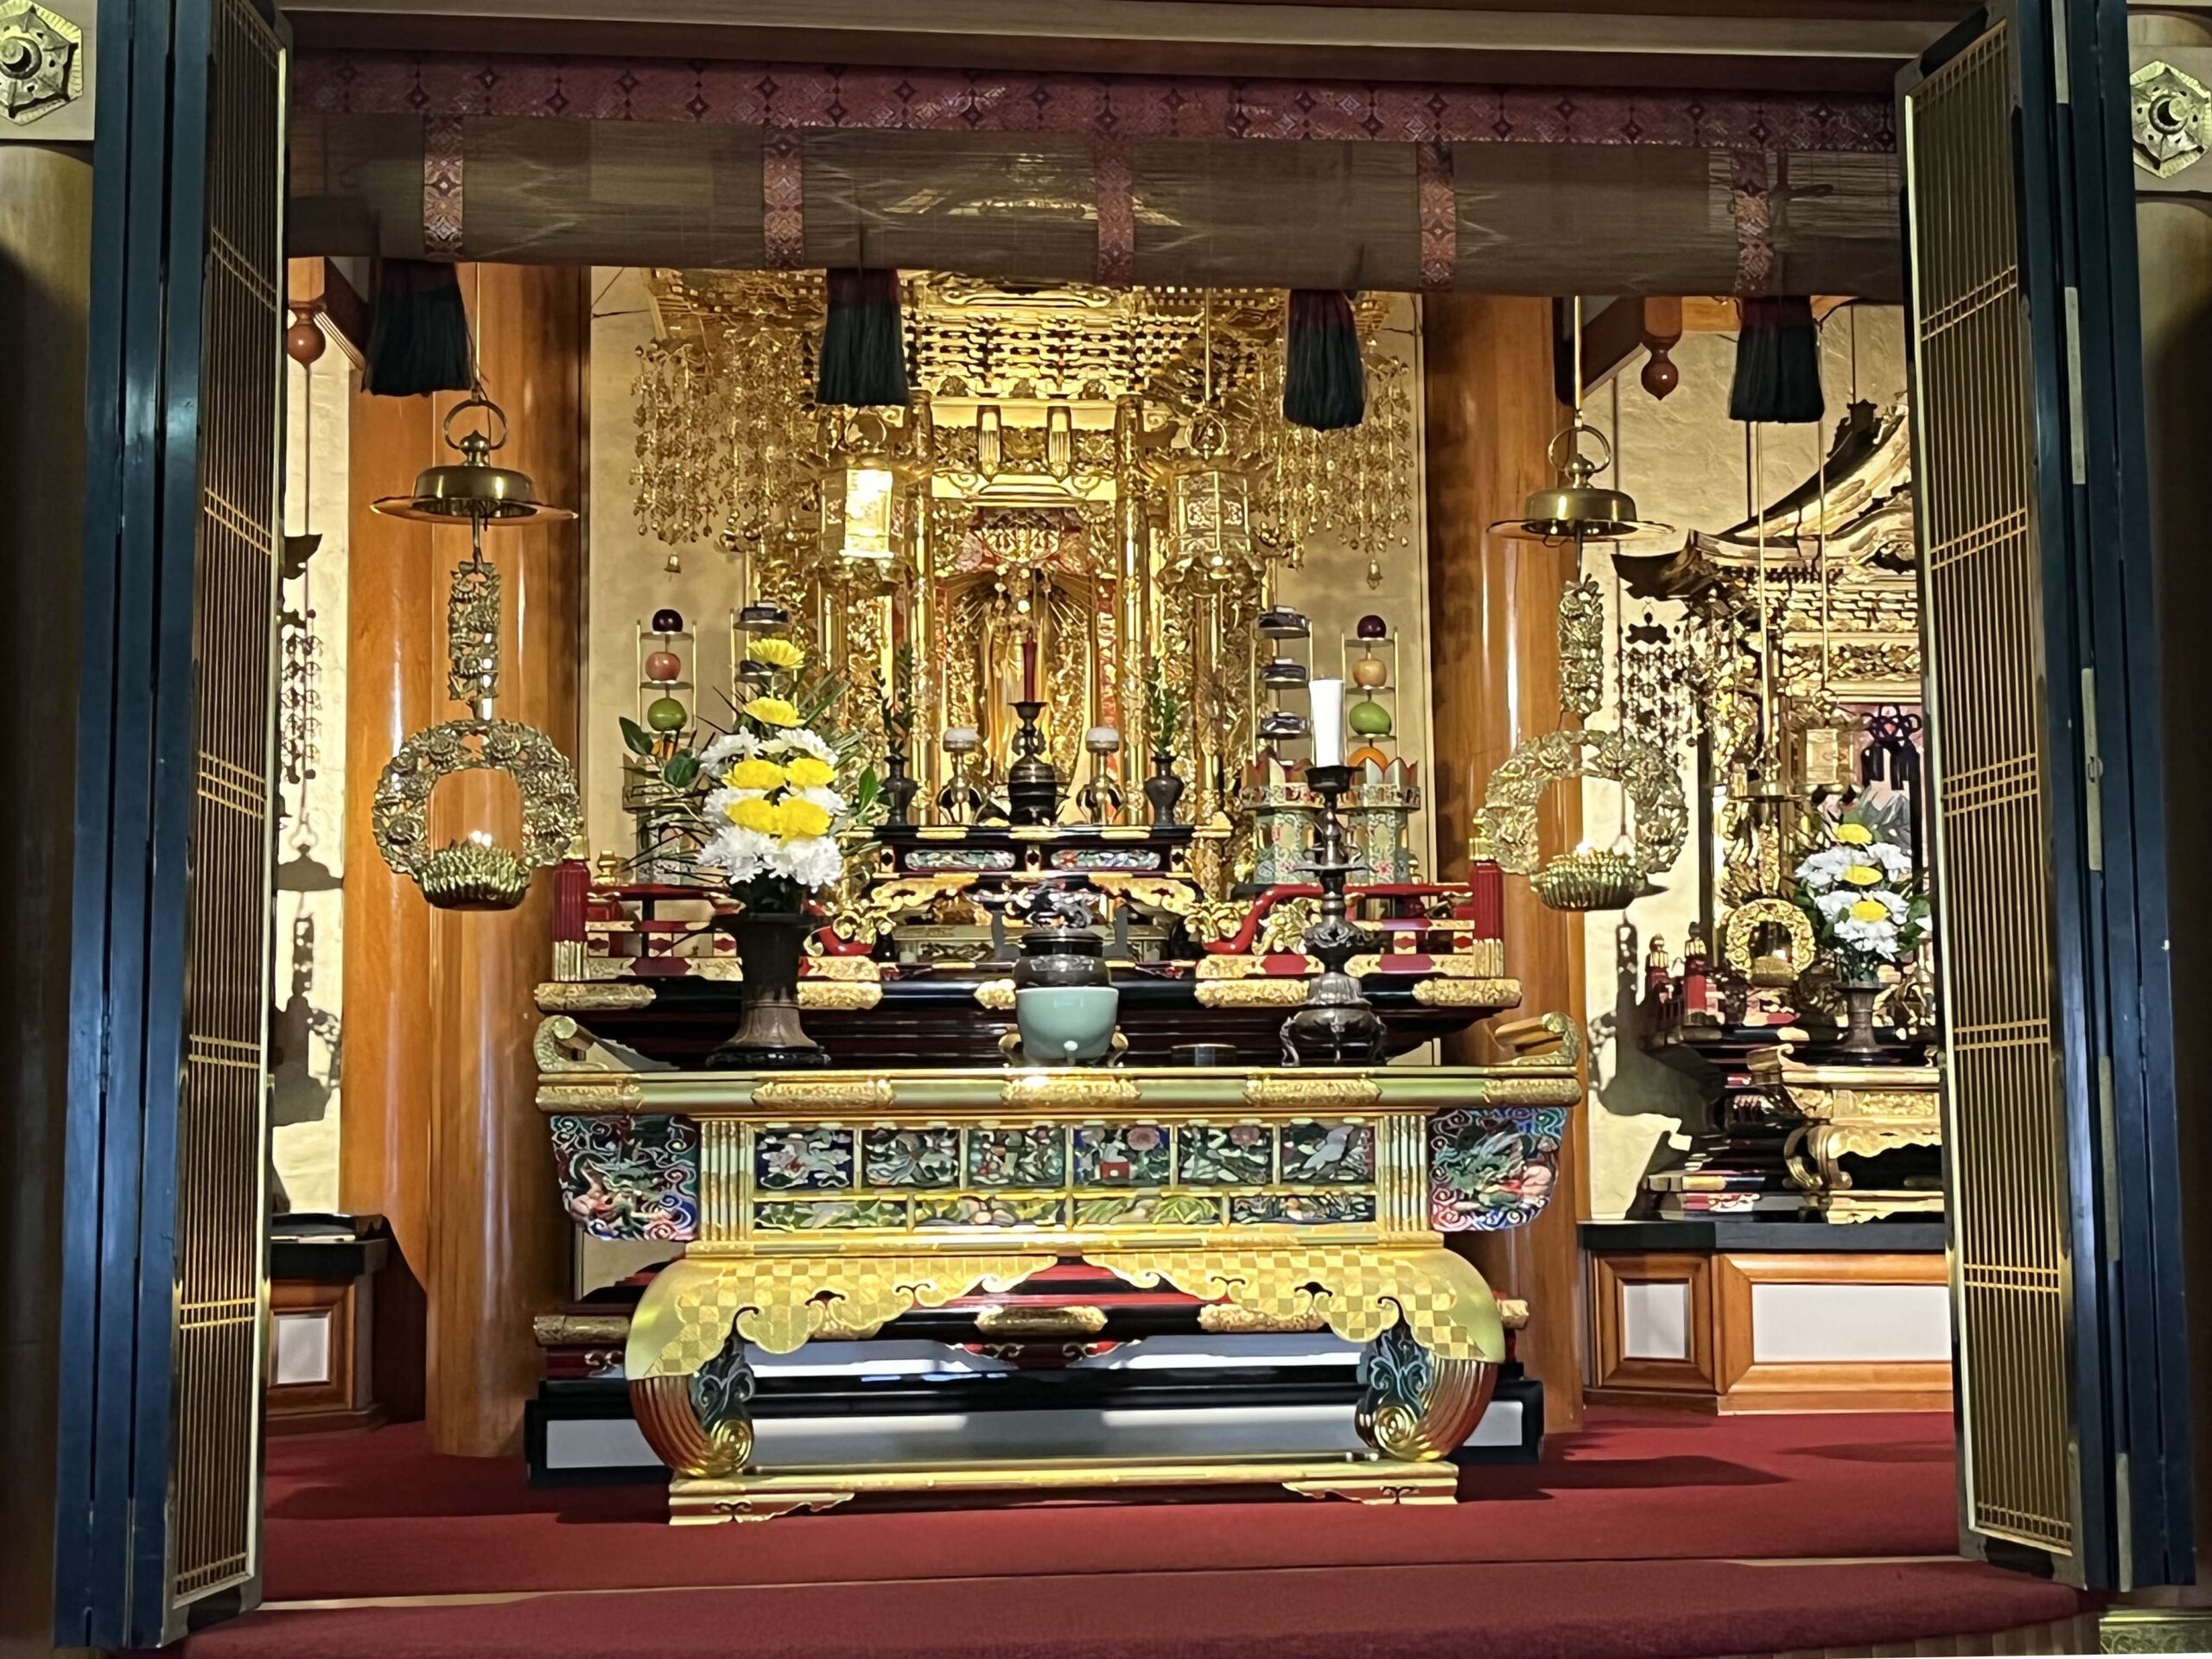 The San Diego Buddhist Temple